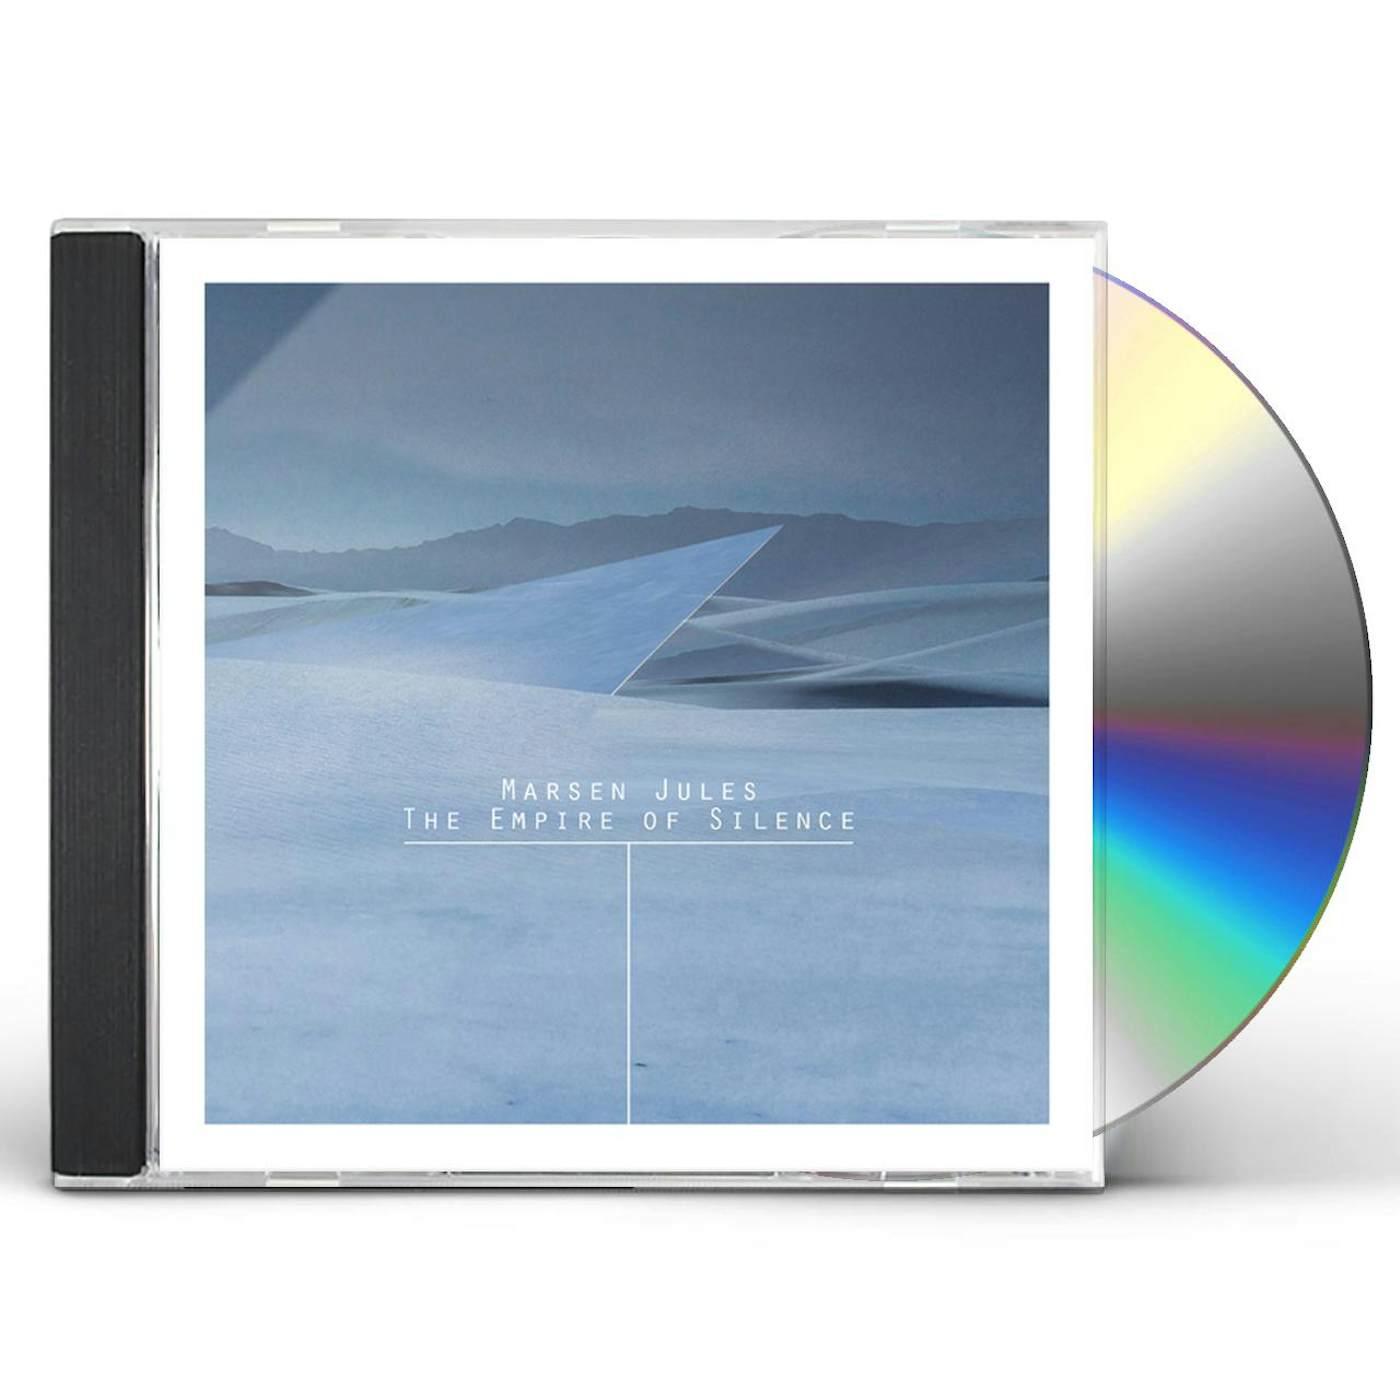 Marsen Jules EMPIRE OF SILENCE CD